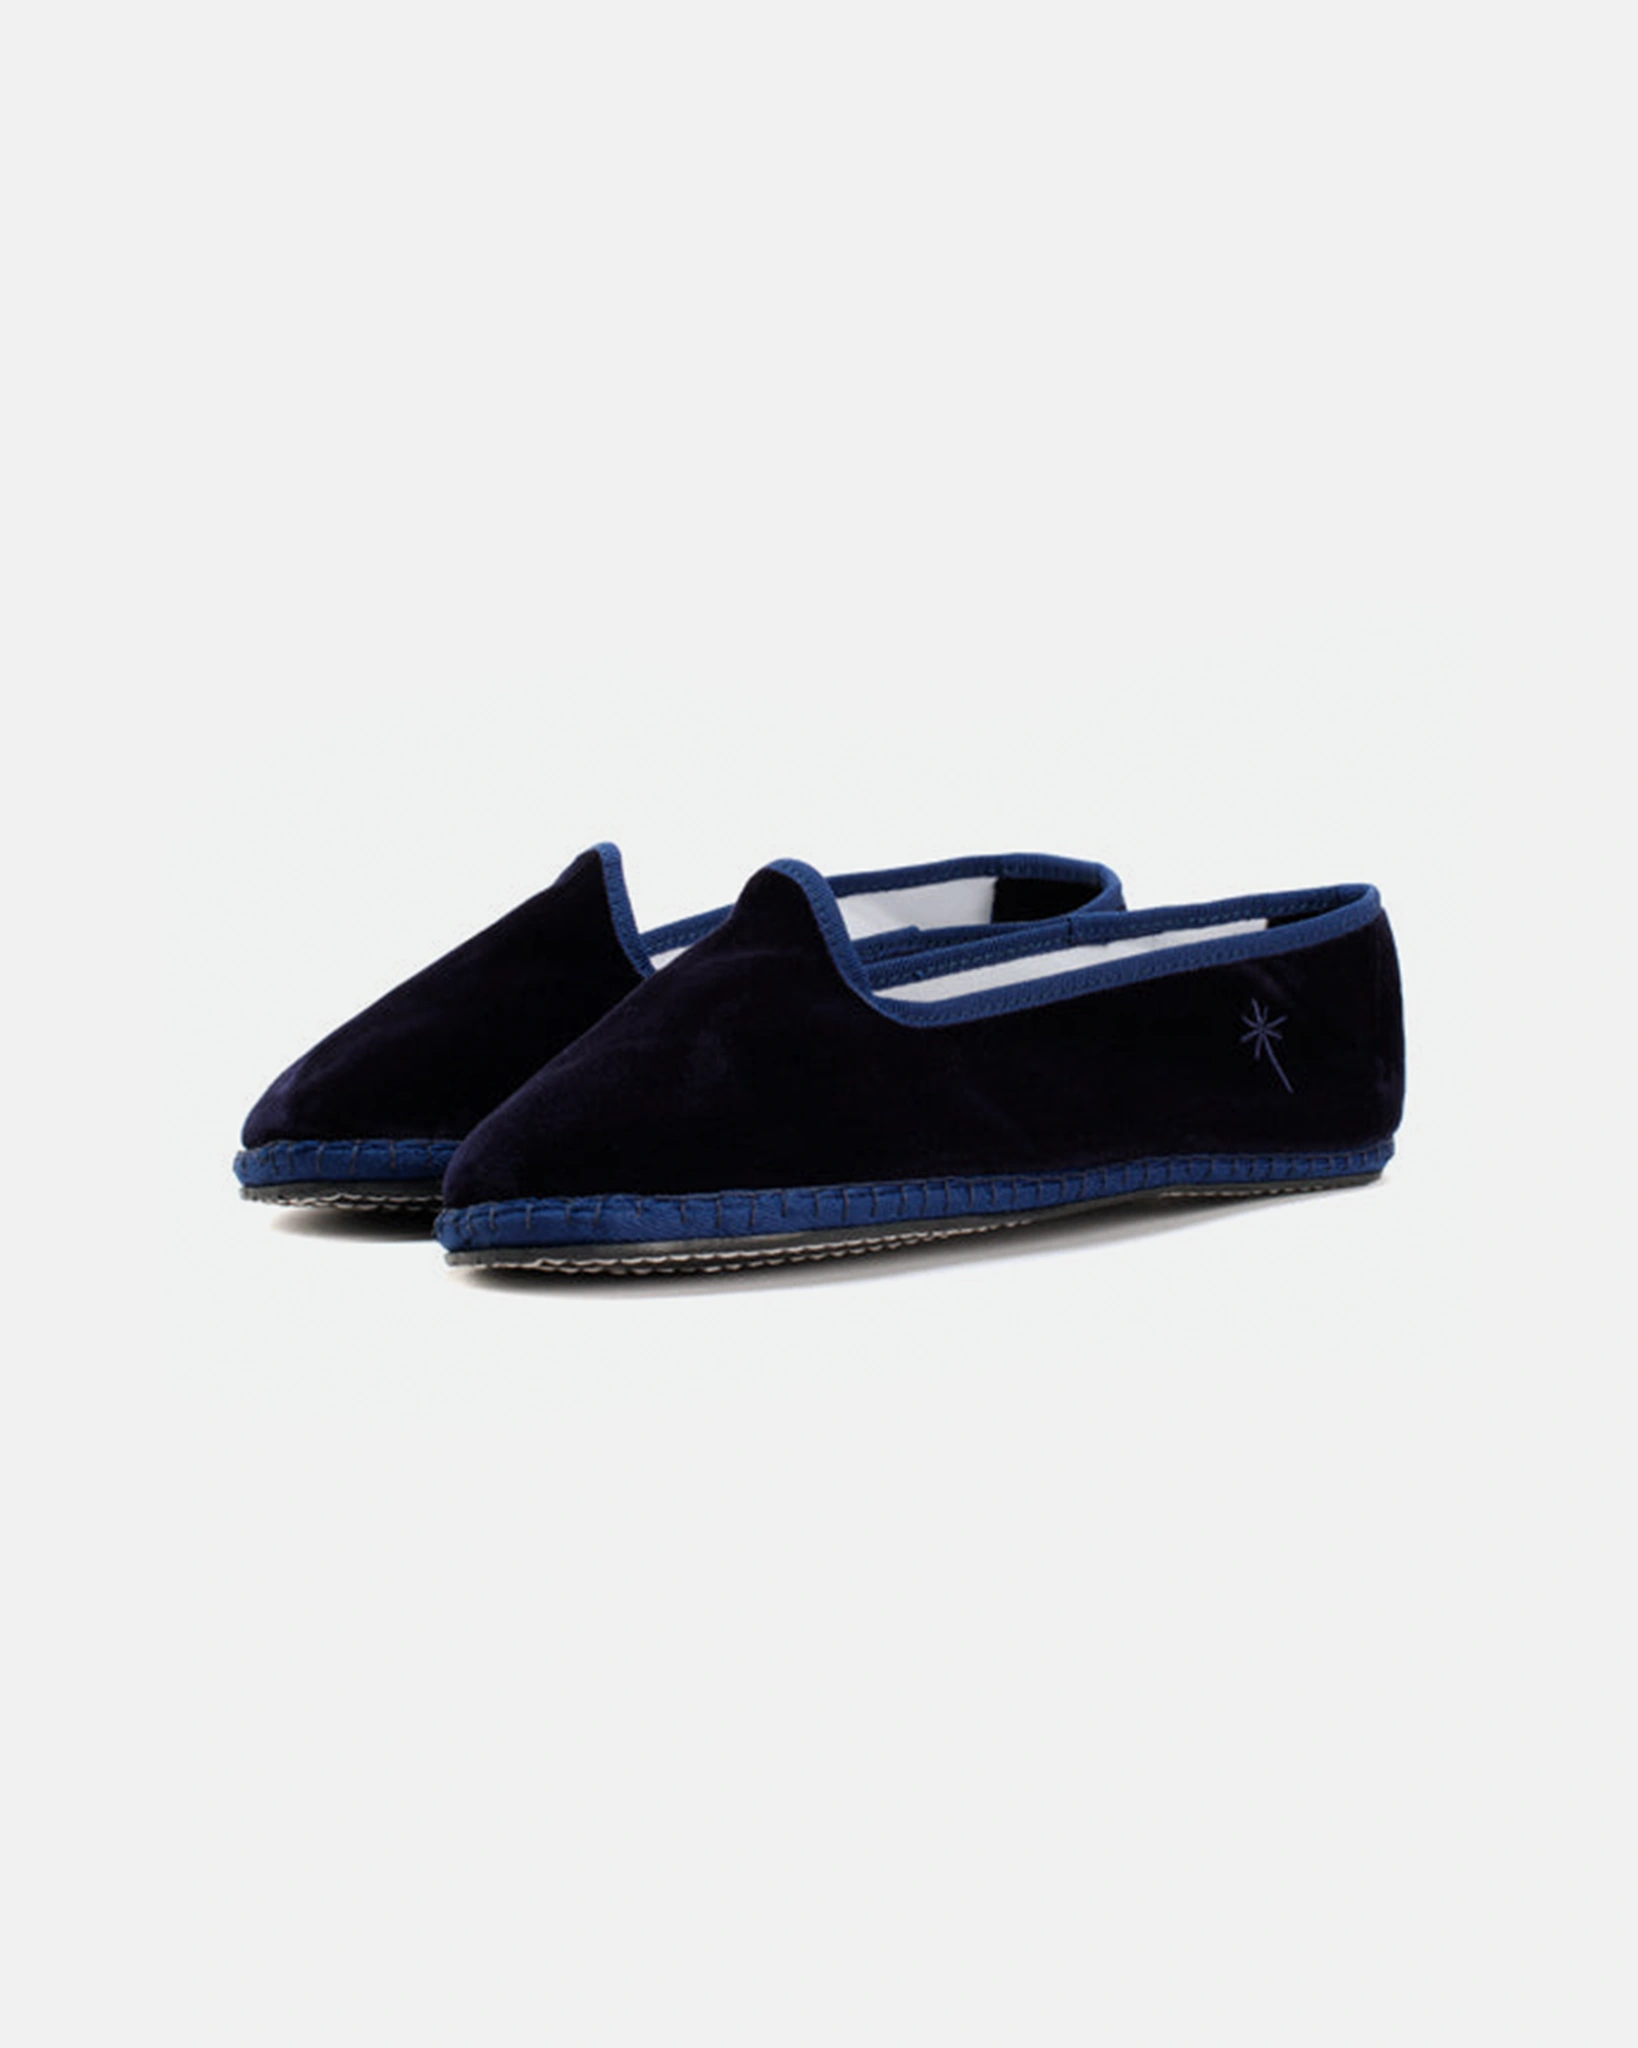 Chaussures Friulane en Velours Bleu Marine